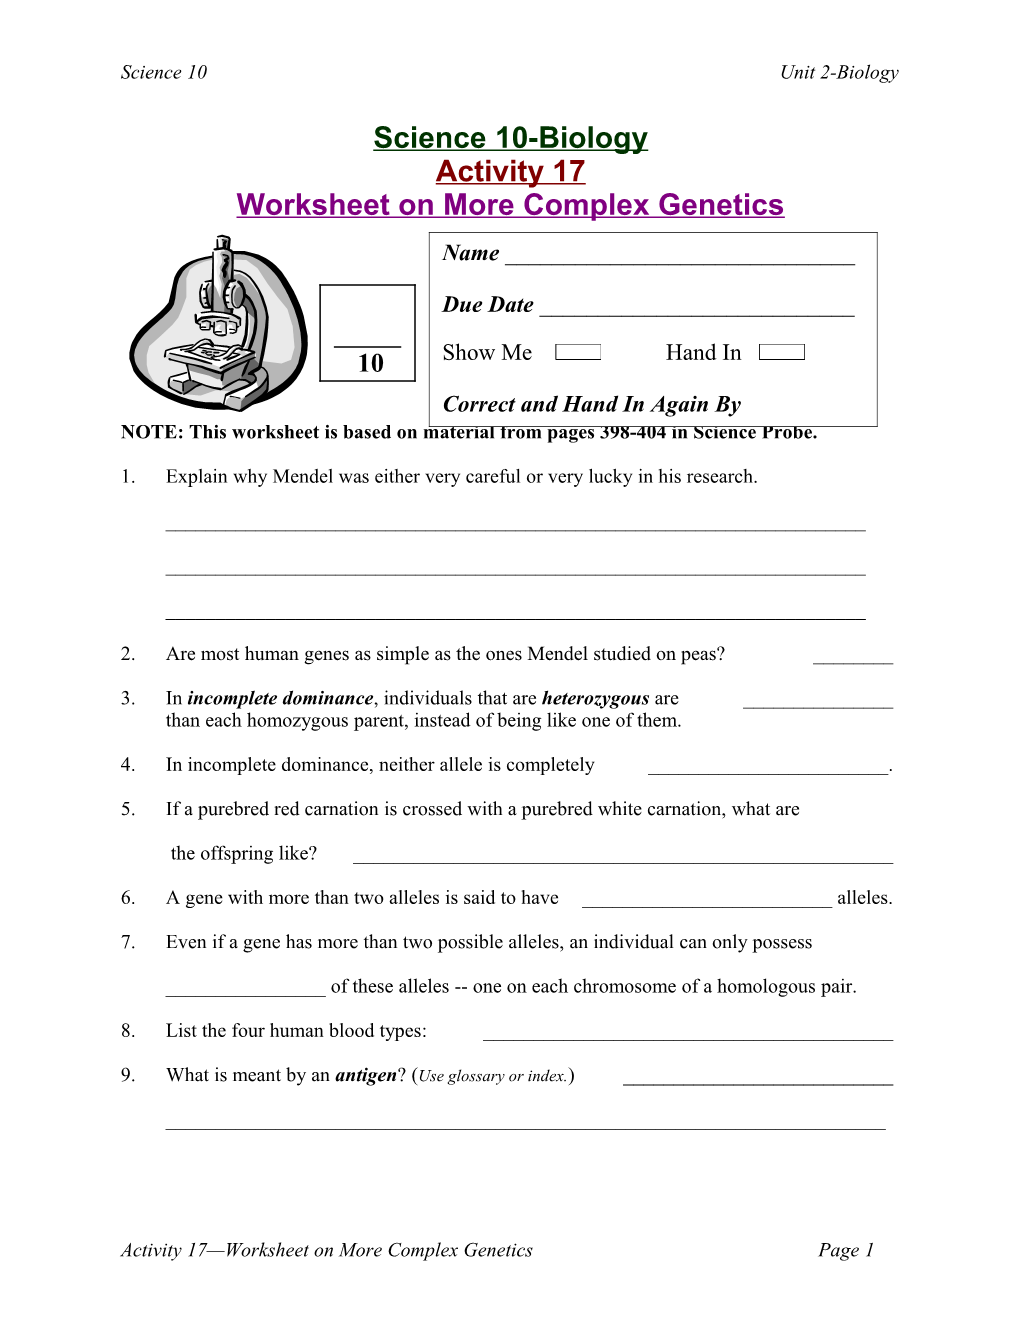 Worksheet on More Complex Genetics